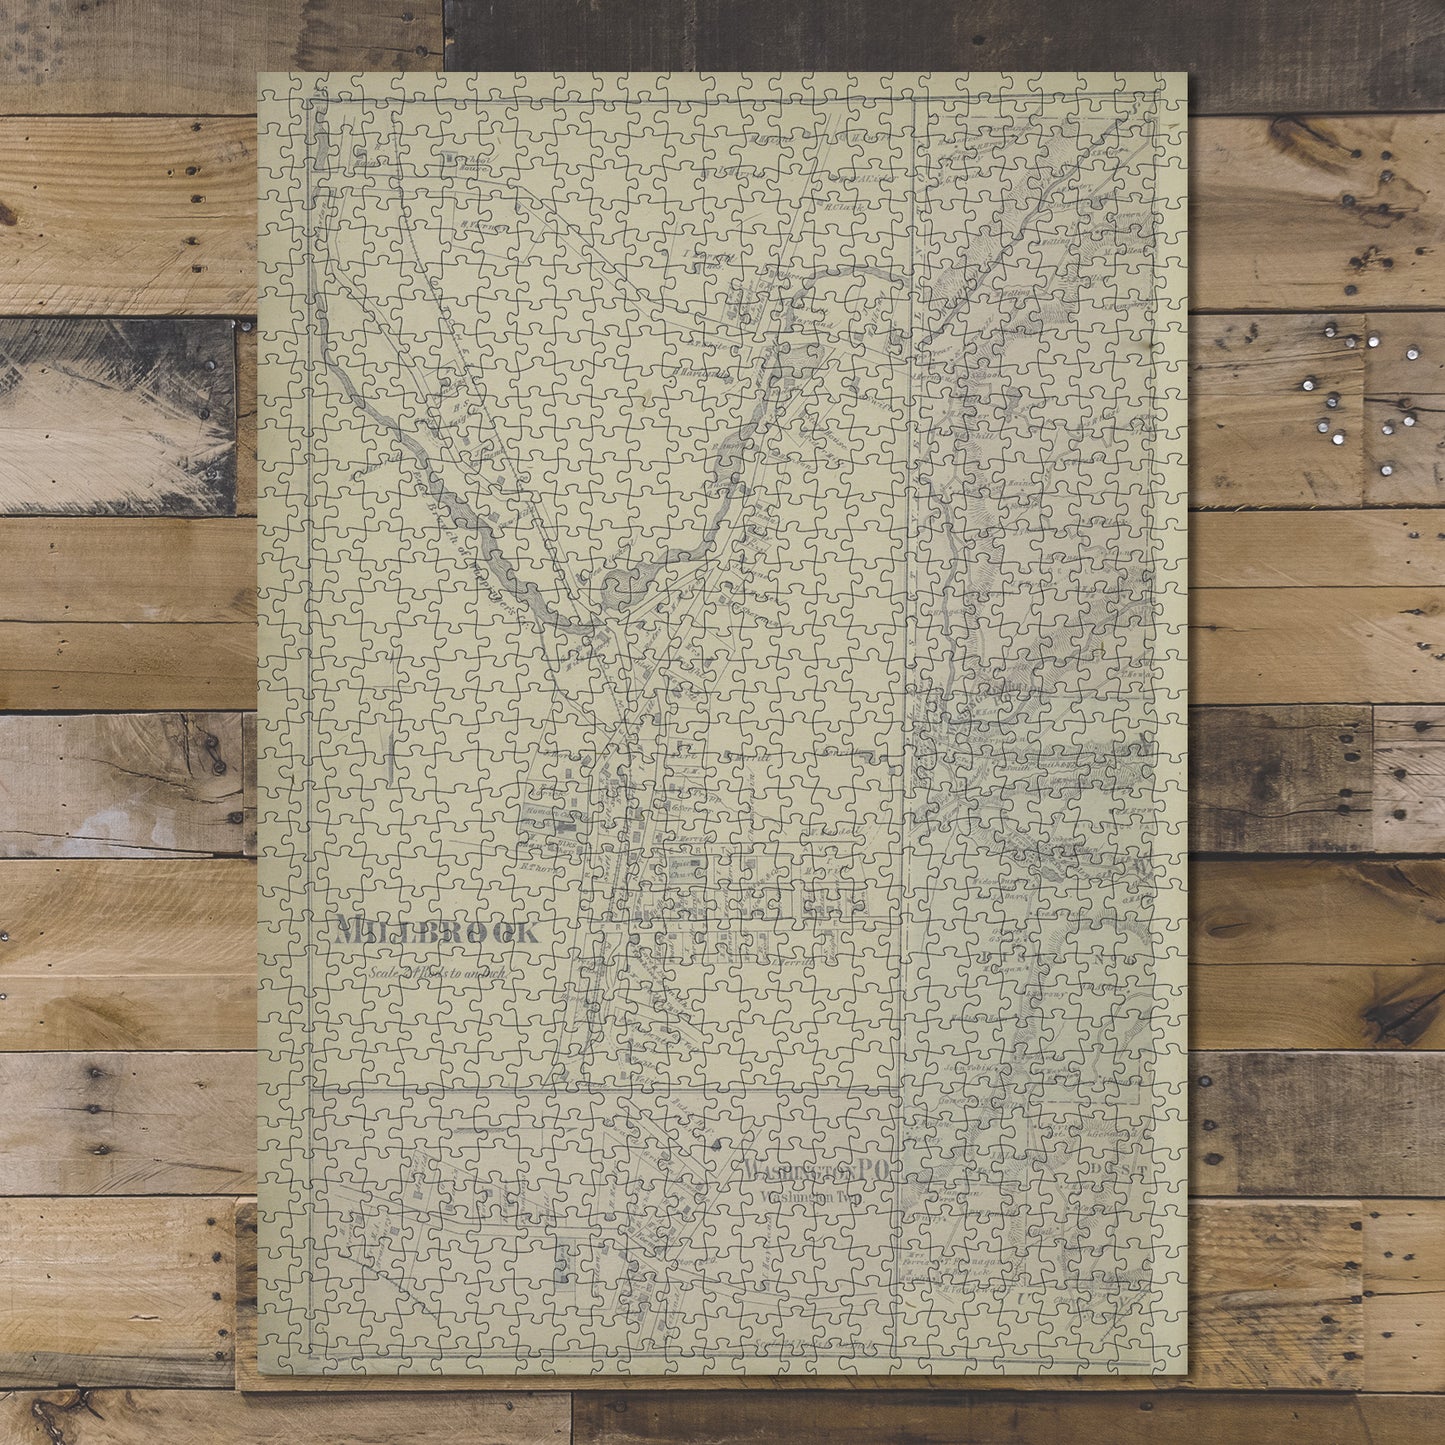 1000 Piece Jigsaw Puzzle 1876 Map of Reading, Pa. Millbrook Village Washington P.O.